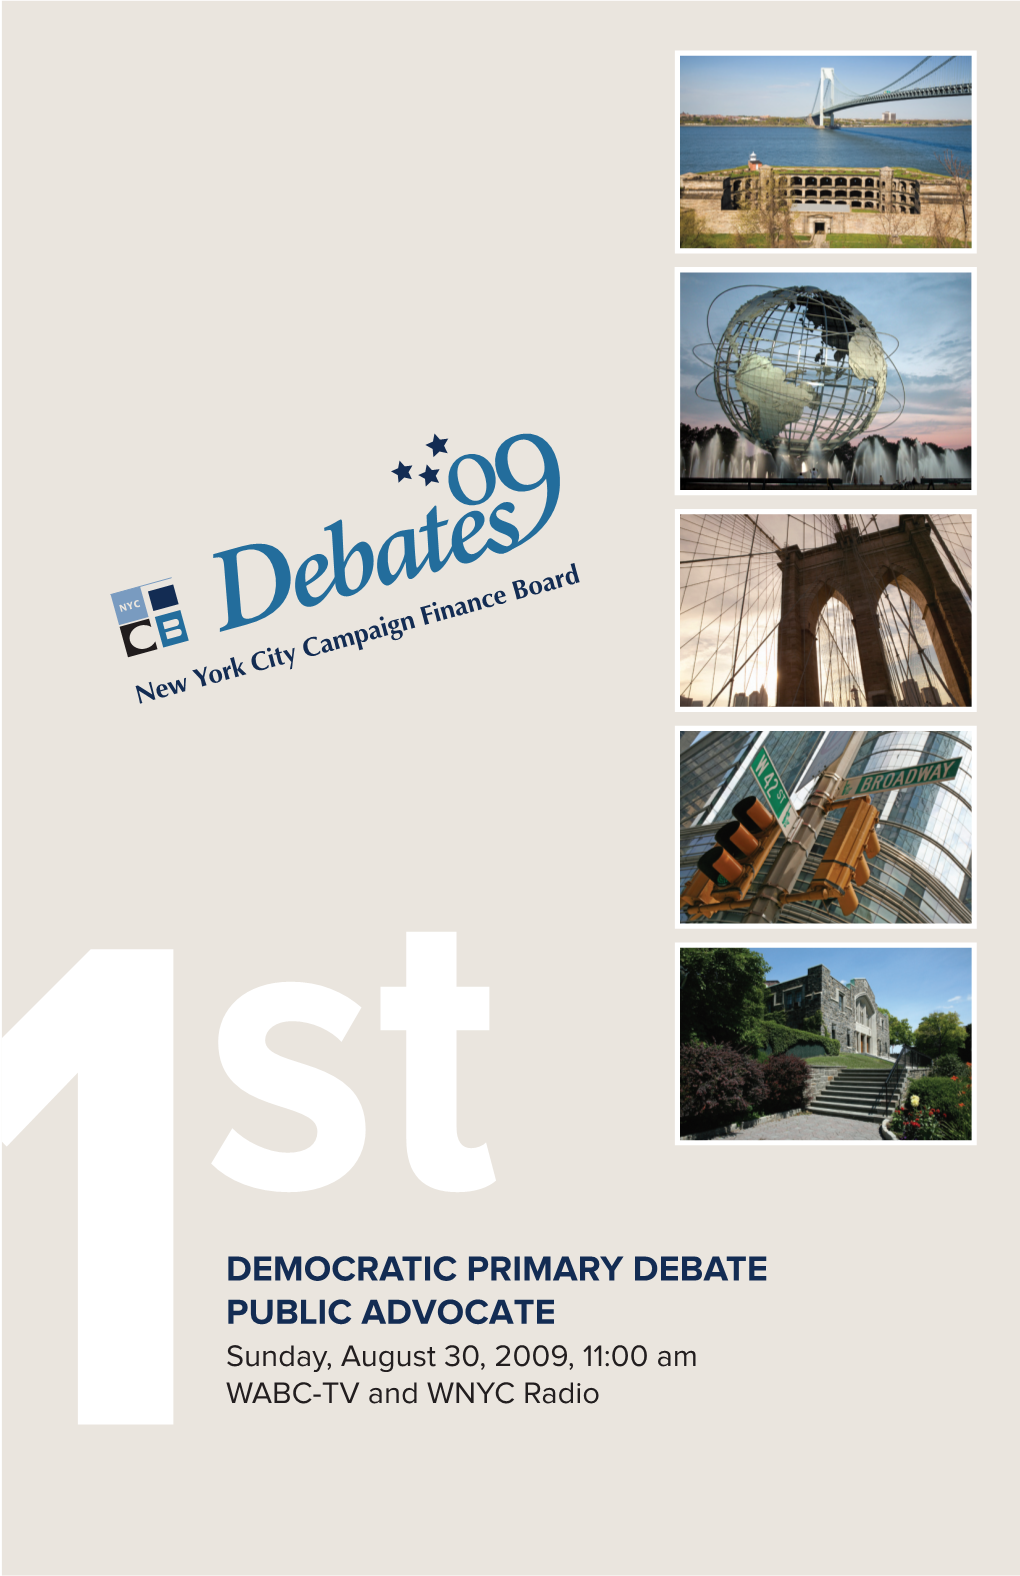 1St Democratic Primary Debate — Public Advocate 1 DEBATE PARTICIPANTS